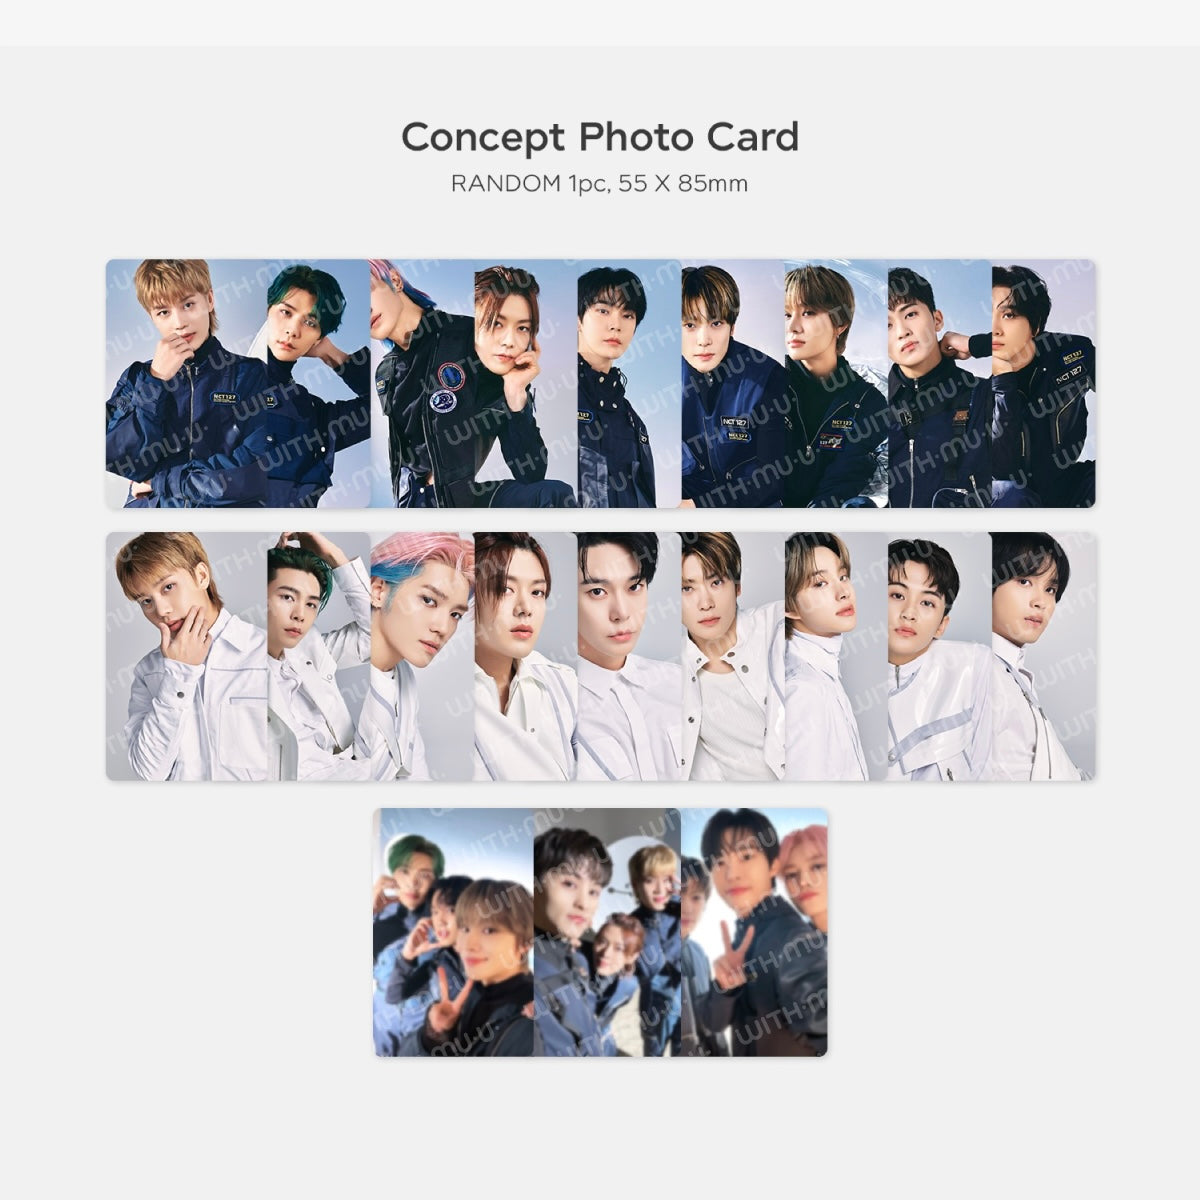 (2 PACK SET) NCT 127 - SM SG RANDOM TRADING CARDS